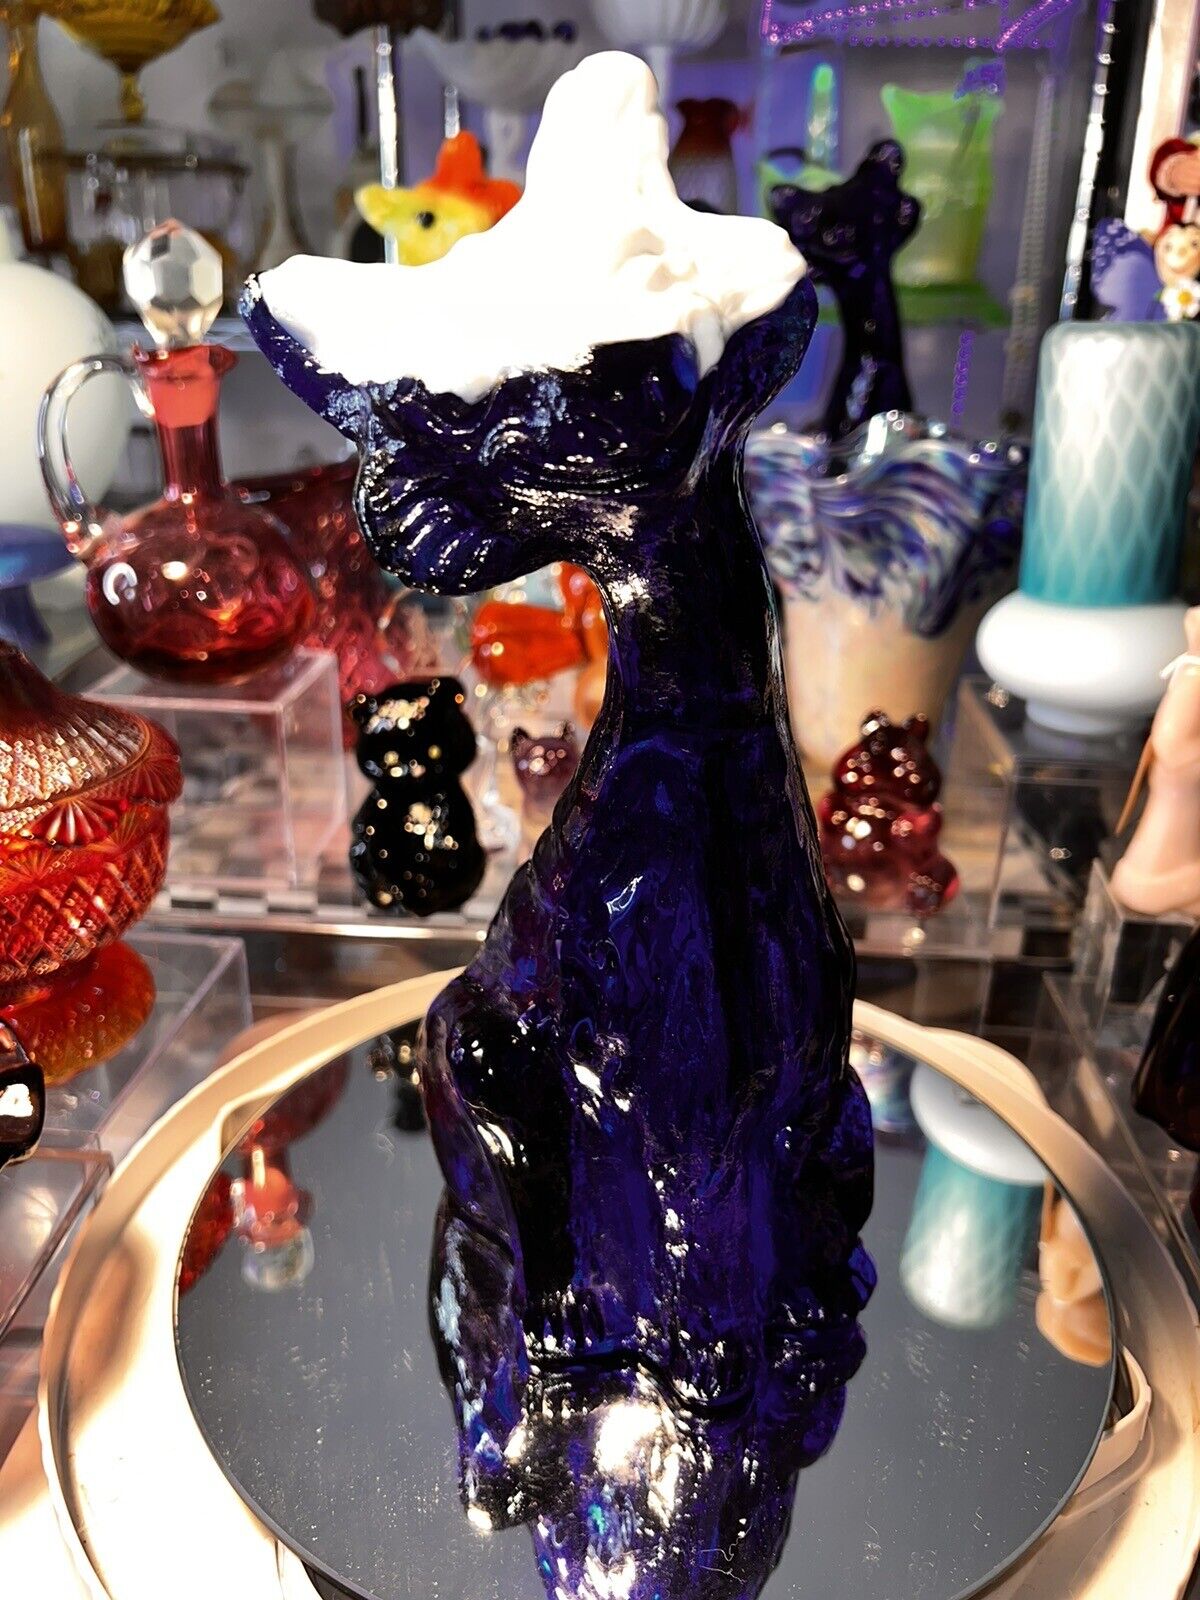 Fenton’s Gift Shop Slag Head Cobalt Blue Glass Alley Cat